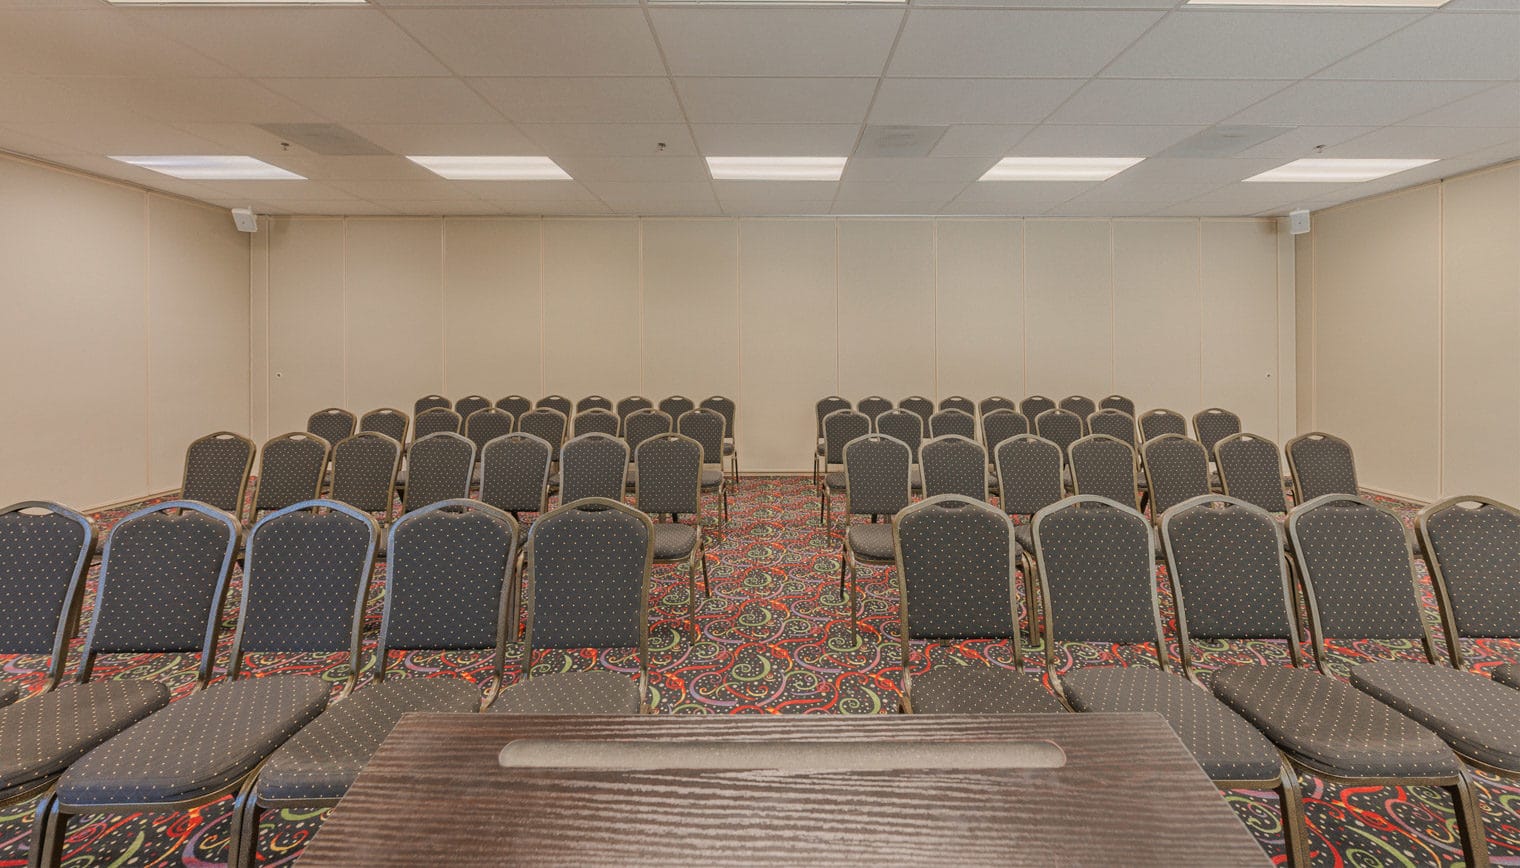 Denali meeting space facing rows of seats.